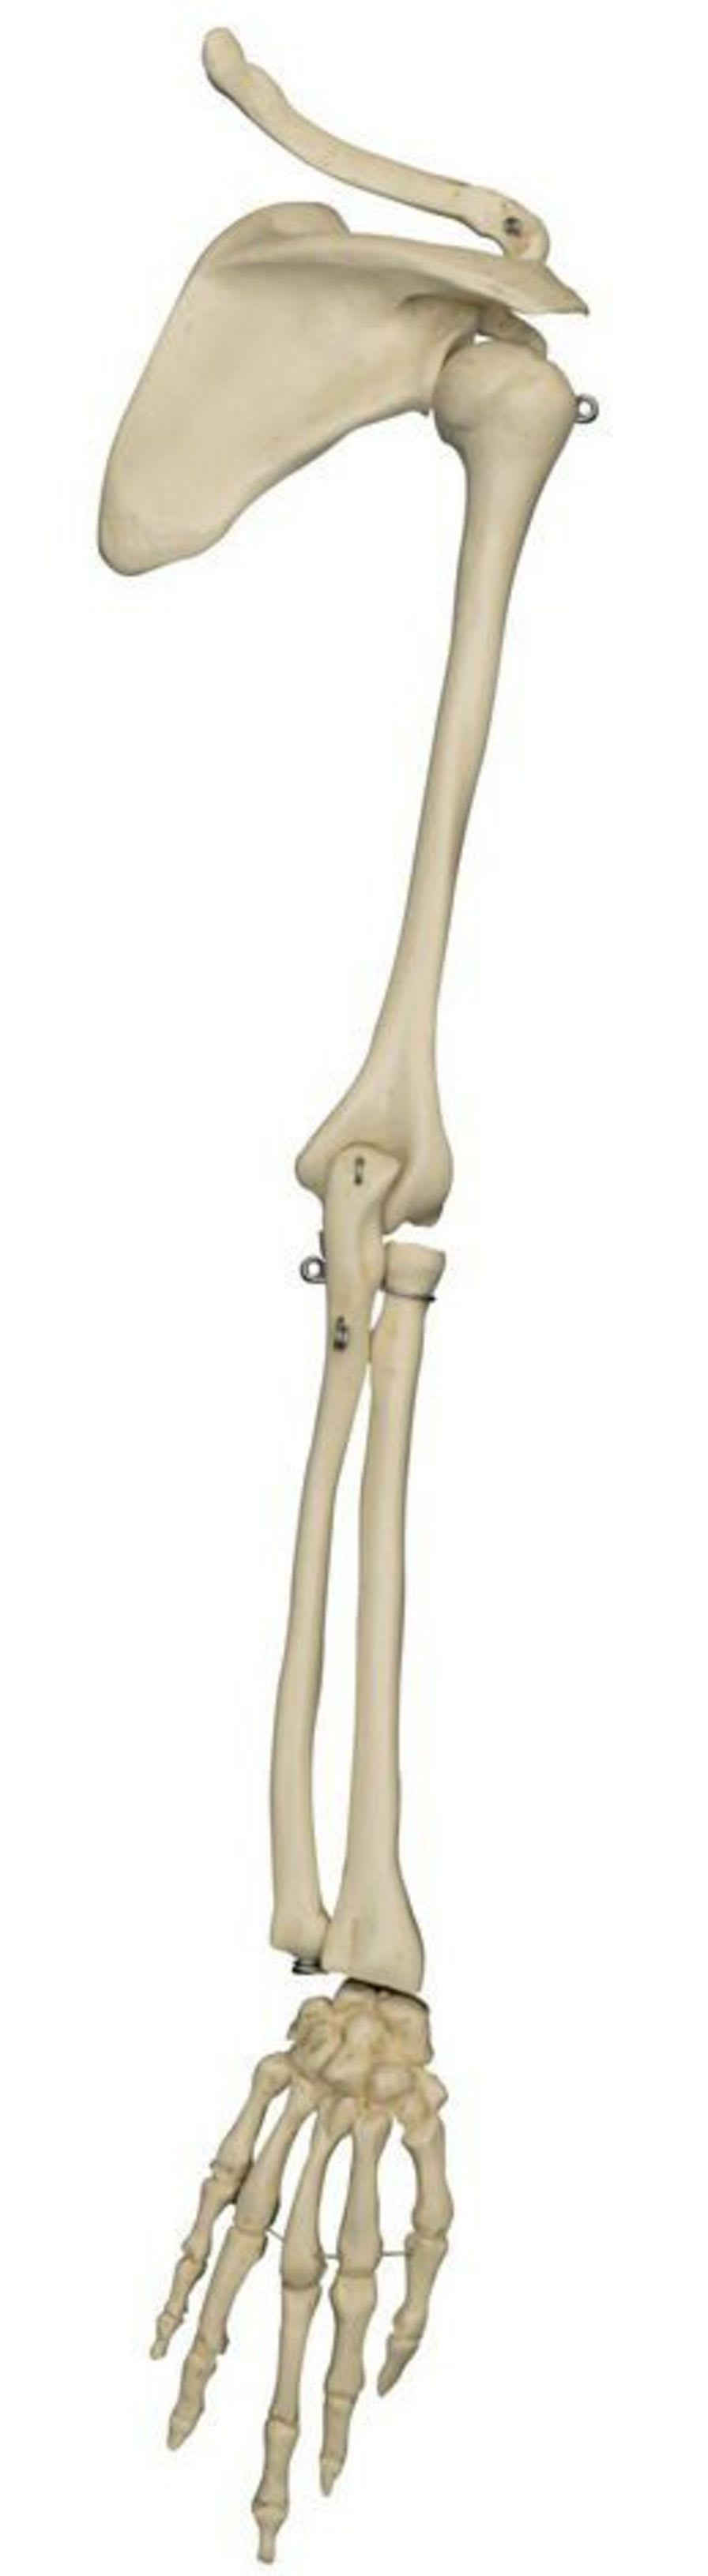 Skeleton anatomical model / arm / miniature MI230 RÜDIGER - ANATOMIE